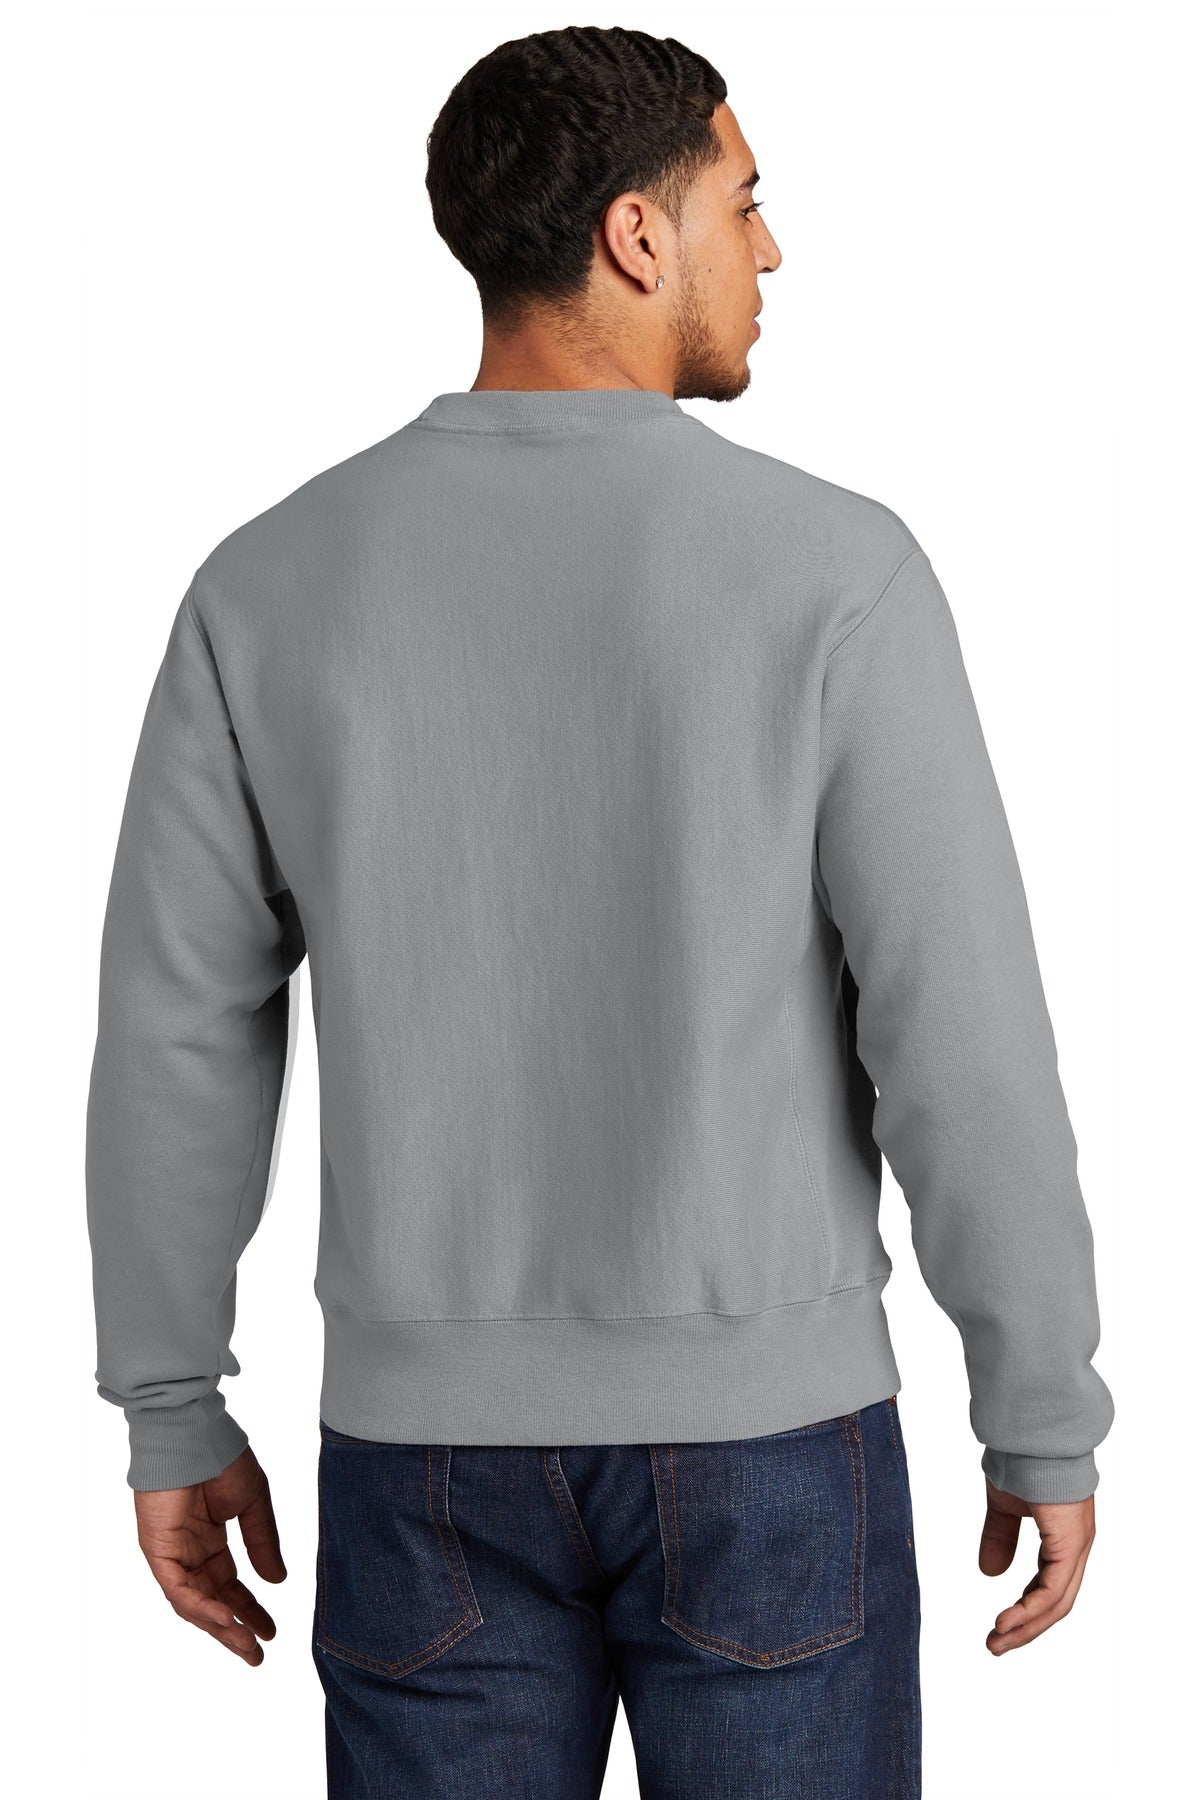 Champion ® Reverse Weave ® Garment-Dyed Crewneck Sweatshirt. GDS149 - DFW Impression